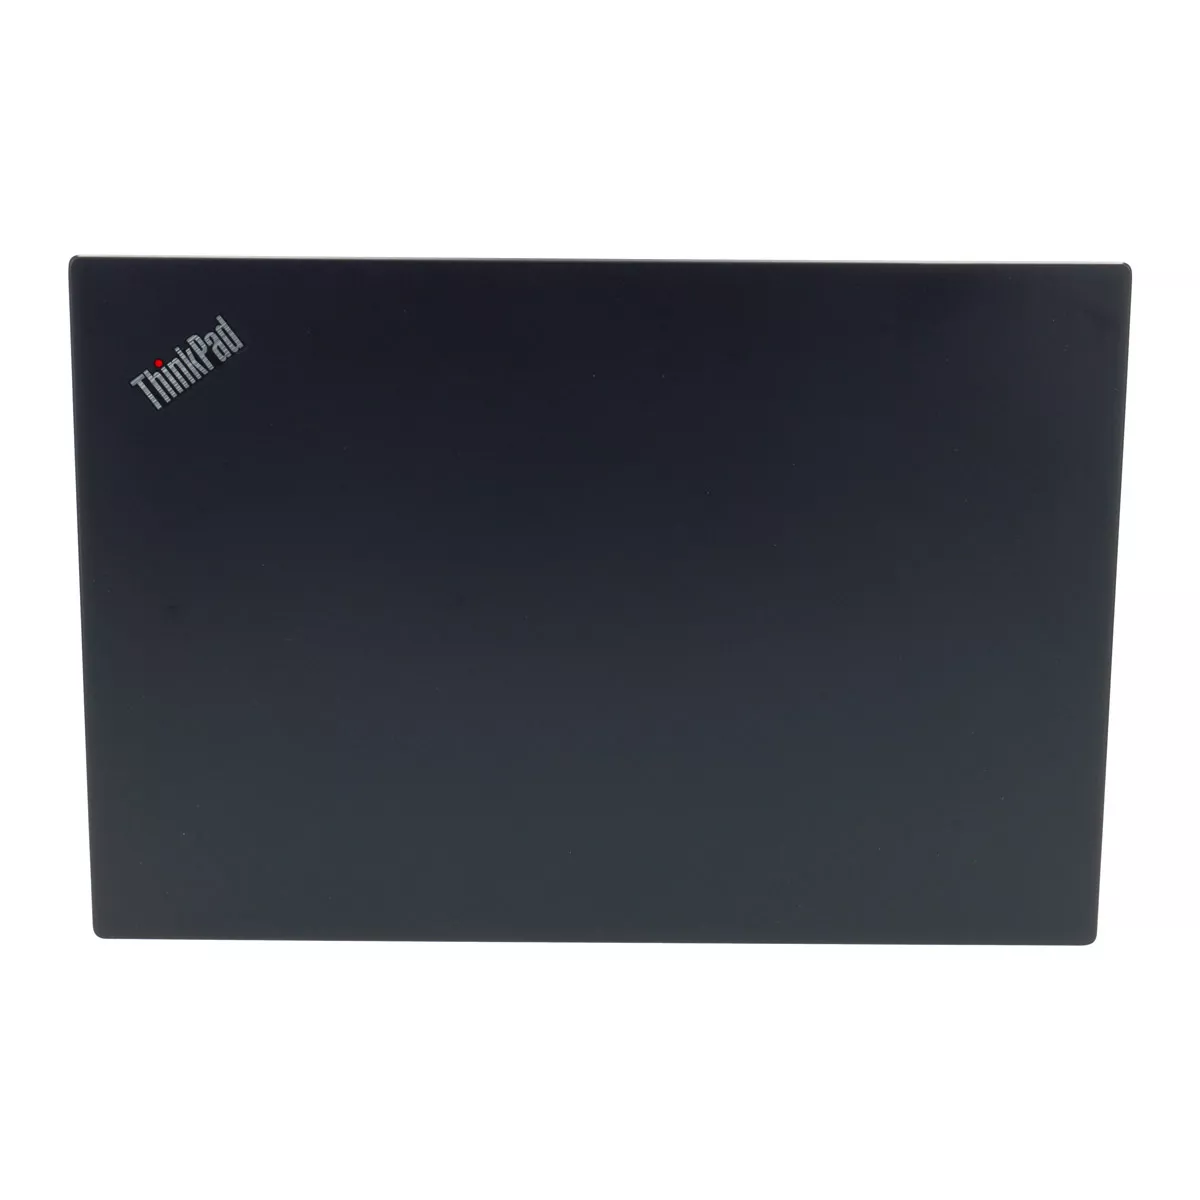 Lenovo ThinkPad T490s Core i5 8365U Full-HD Touch 16 GB 240 GB M.2 nVME SSD Webcam A+